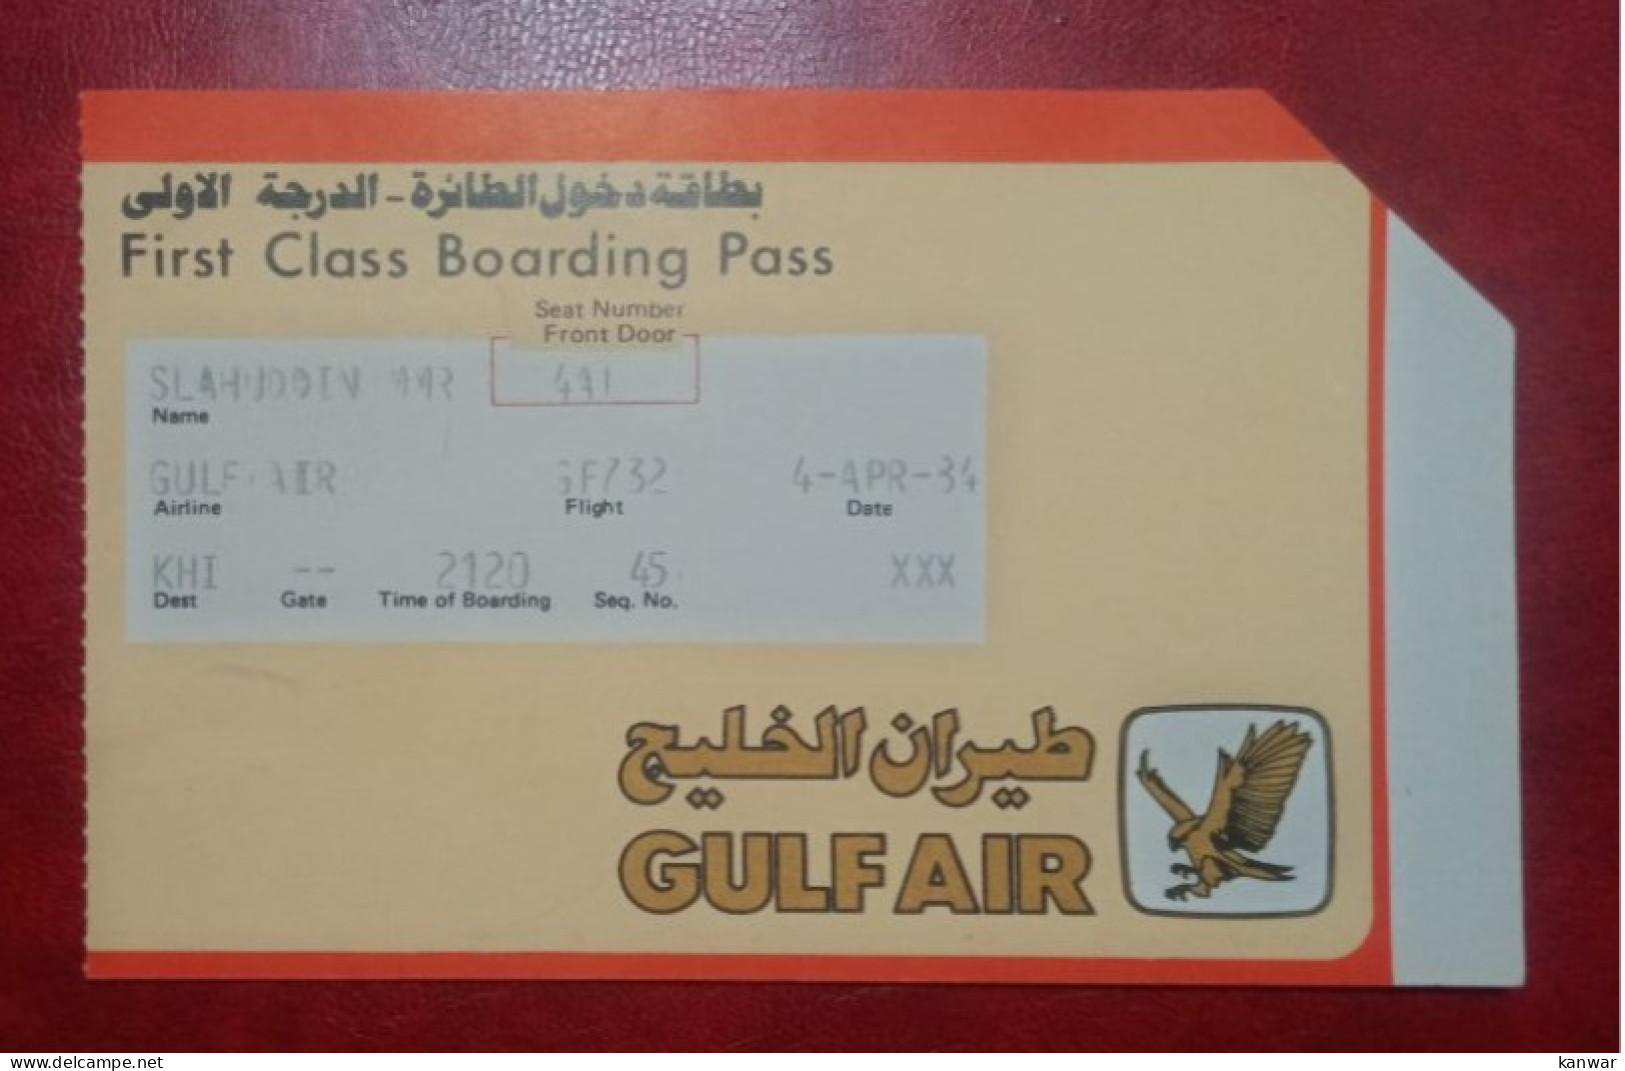 GULF AIR AIRLINES PASSENGER BOARDING PASS FIRST CLASS - Boarding Passes